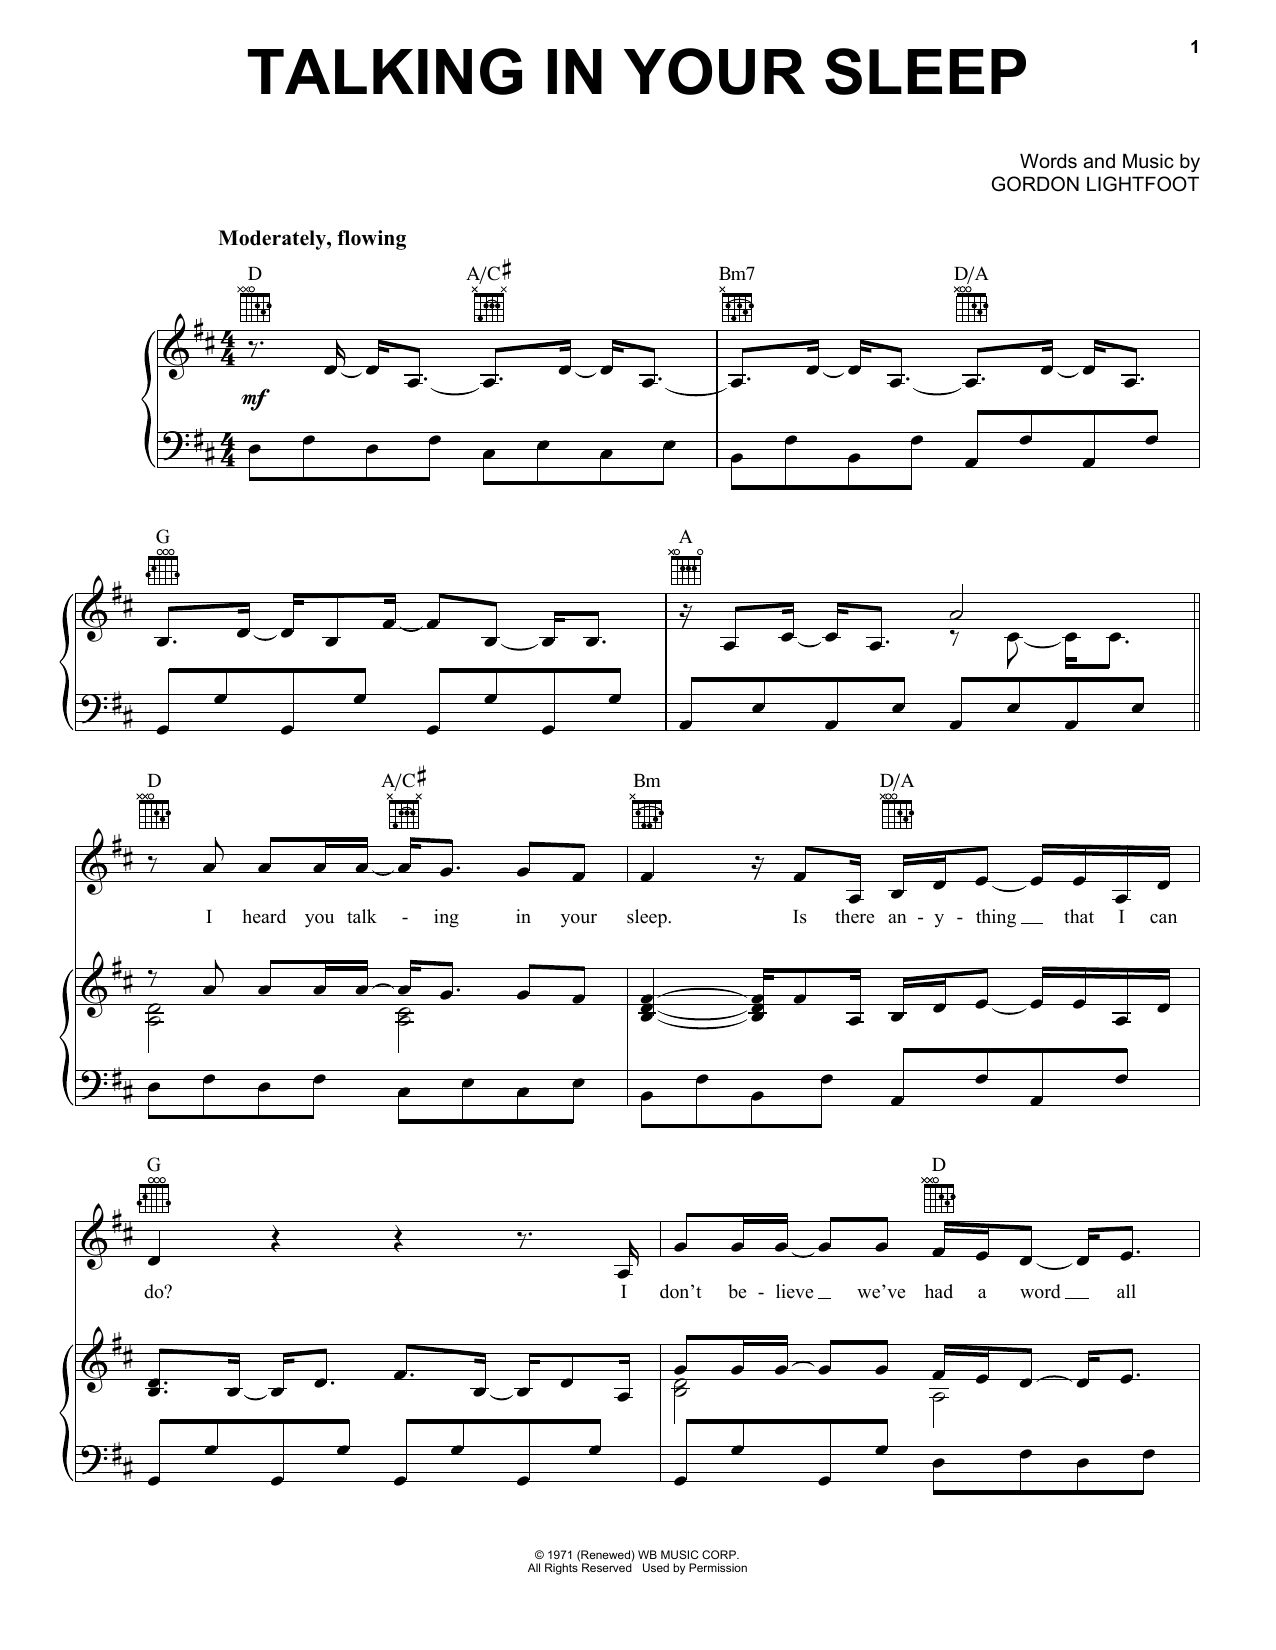 Gordon Lightfoot Talking In Your Sleep Sheet Music Notes & Chords for Lyrics & Chords - Download or Print PDF